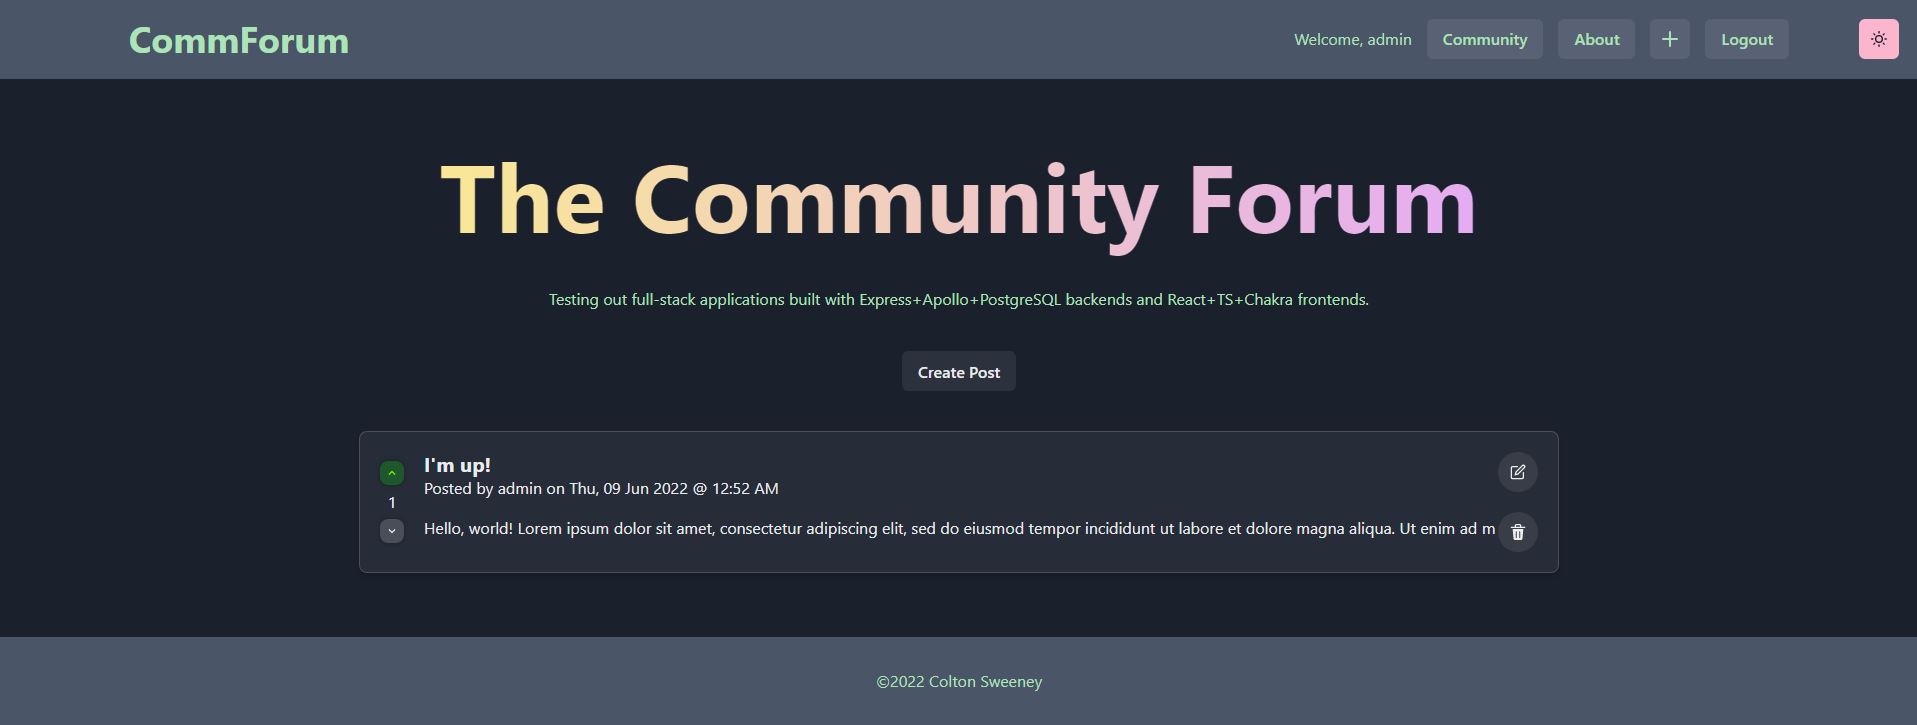 Community Forum- Featured Shot